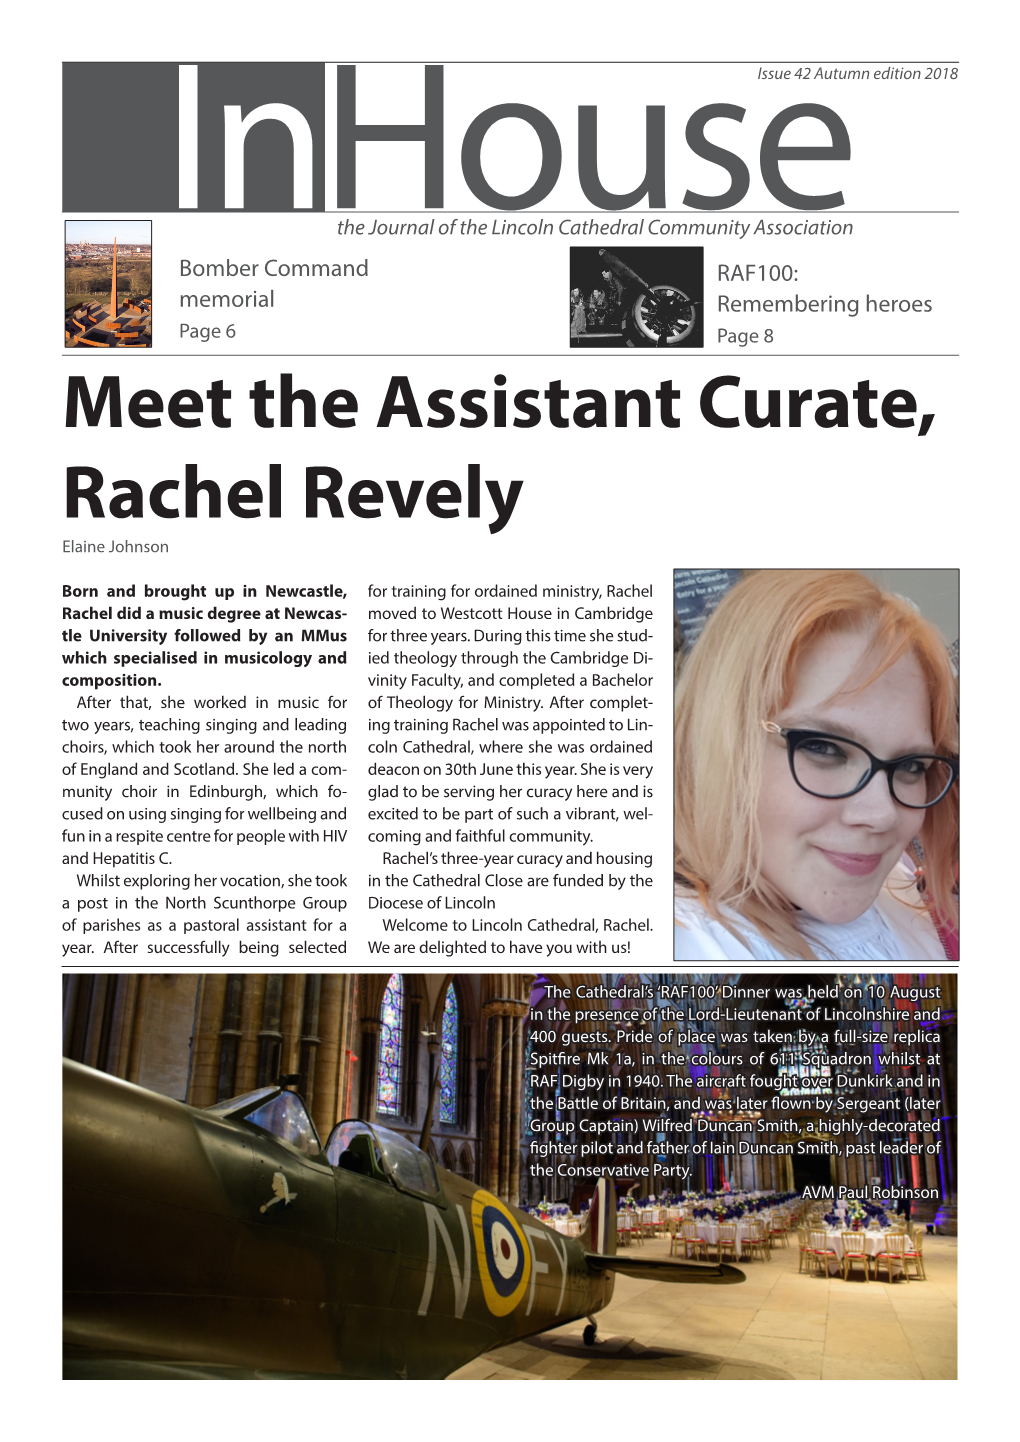 Meet the Assistant Curate, Rachel Revely Elaine Johnson